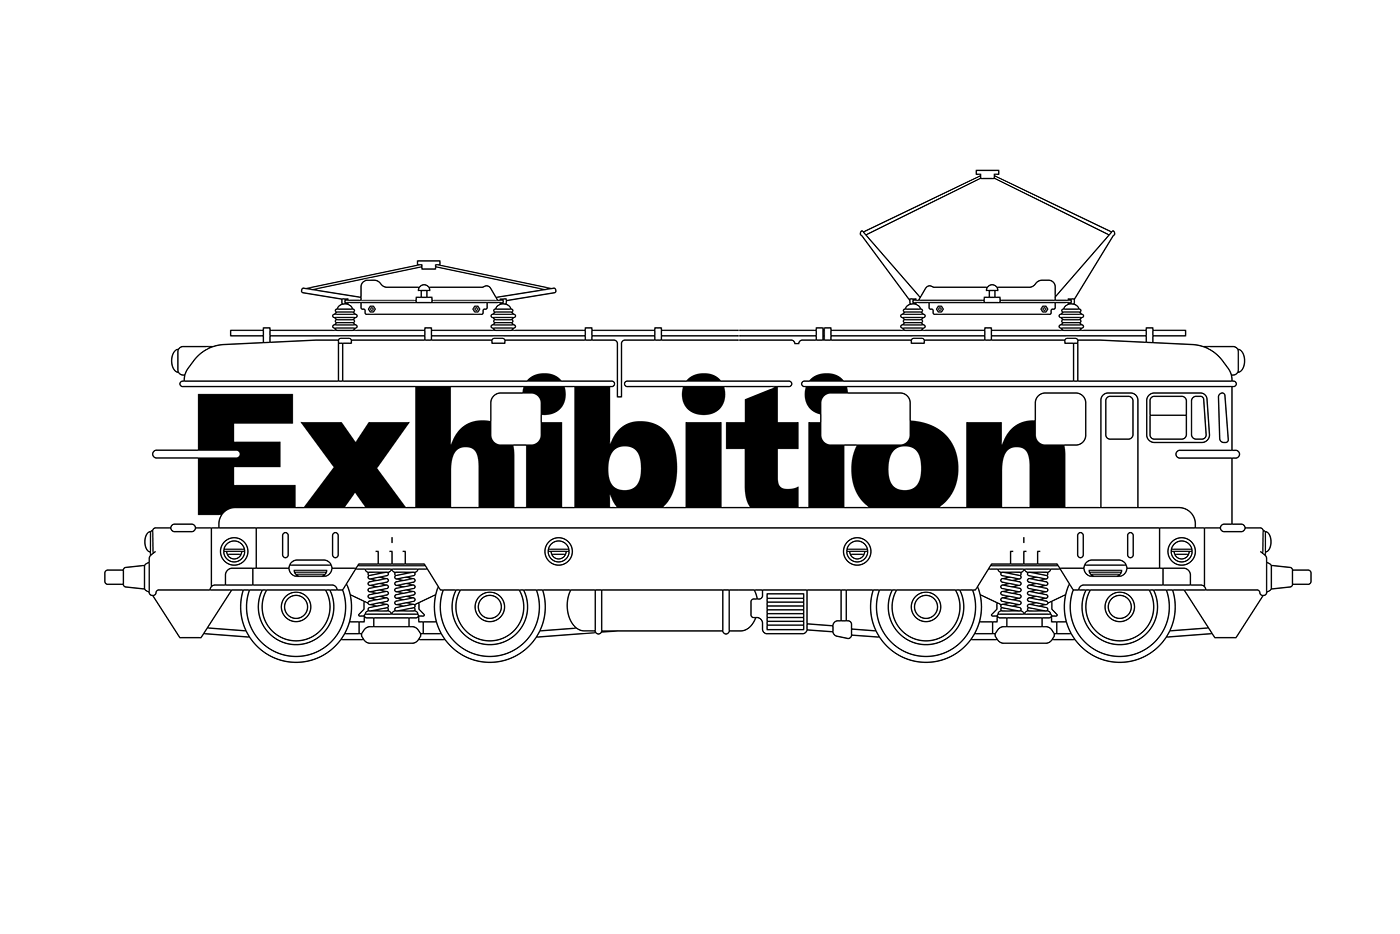 book branding  editorial Eurocity Exhibition  exhibition branding graphic design  STATION train